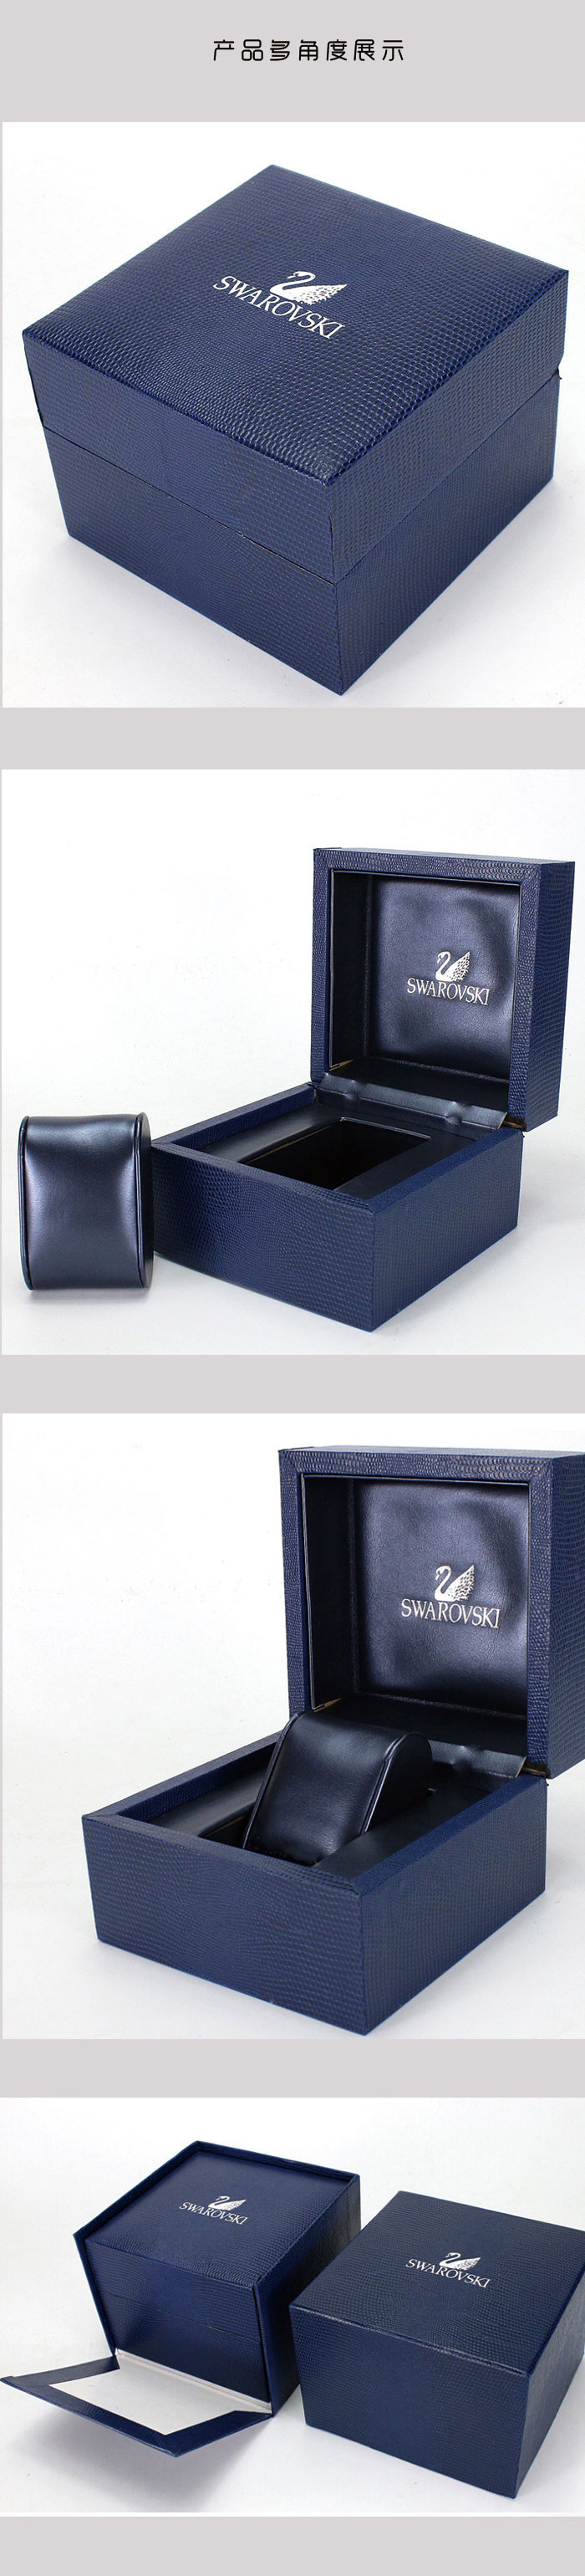 swarovski手表包装盒